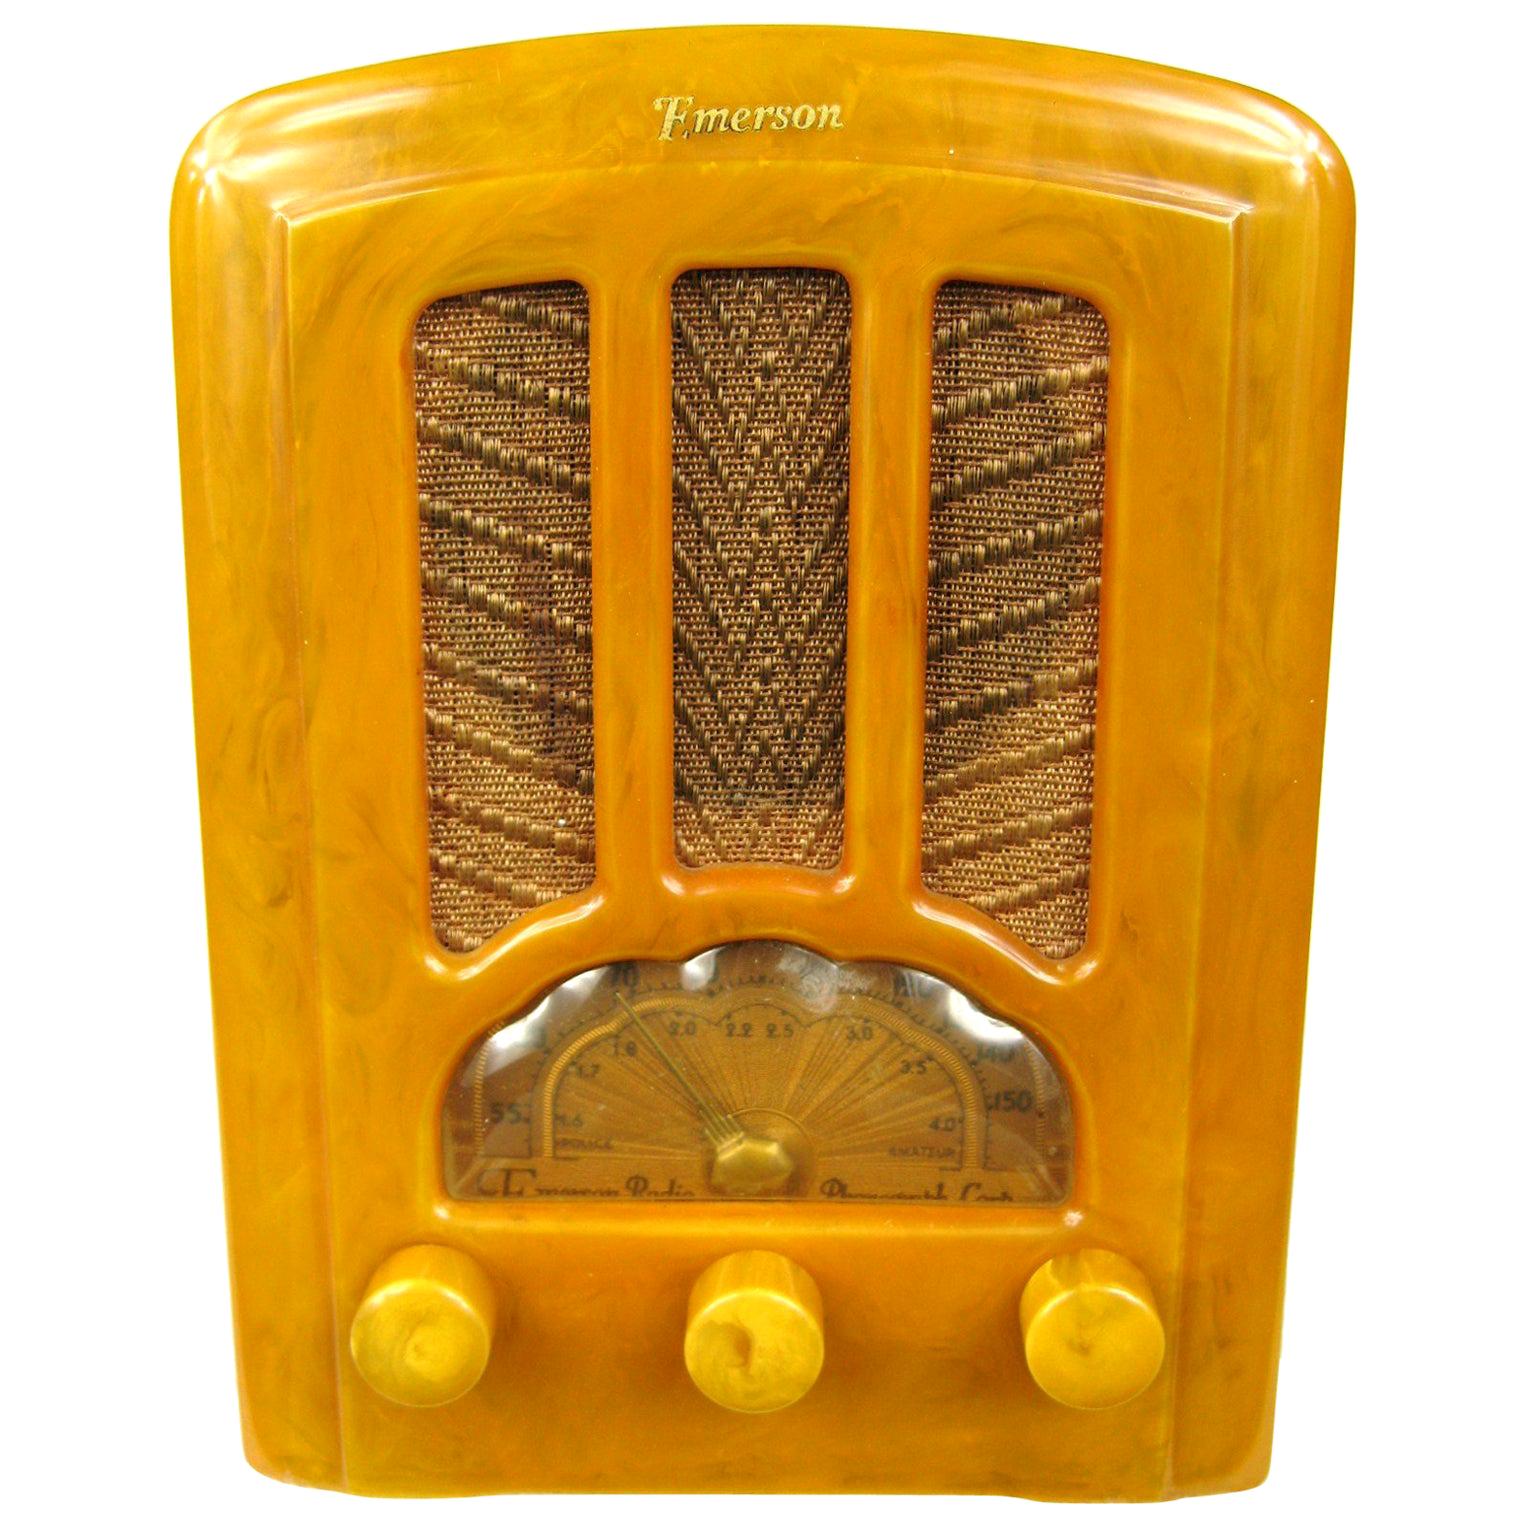 1937 Yellow Emerson Au-190 Cathedral Catalin Bakelite Tube Radio